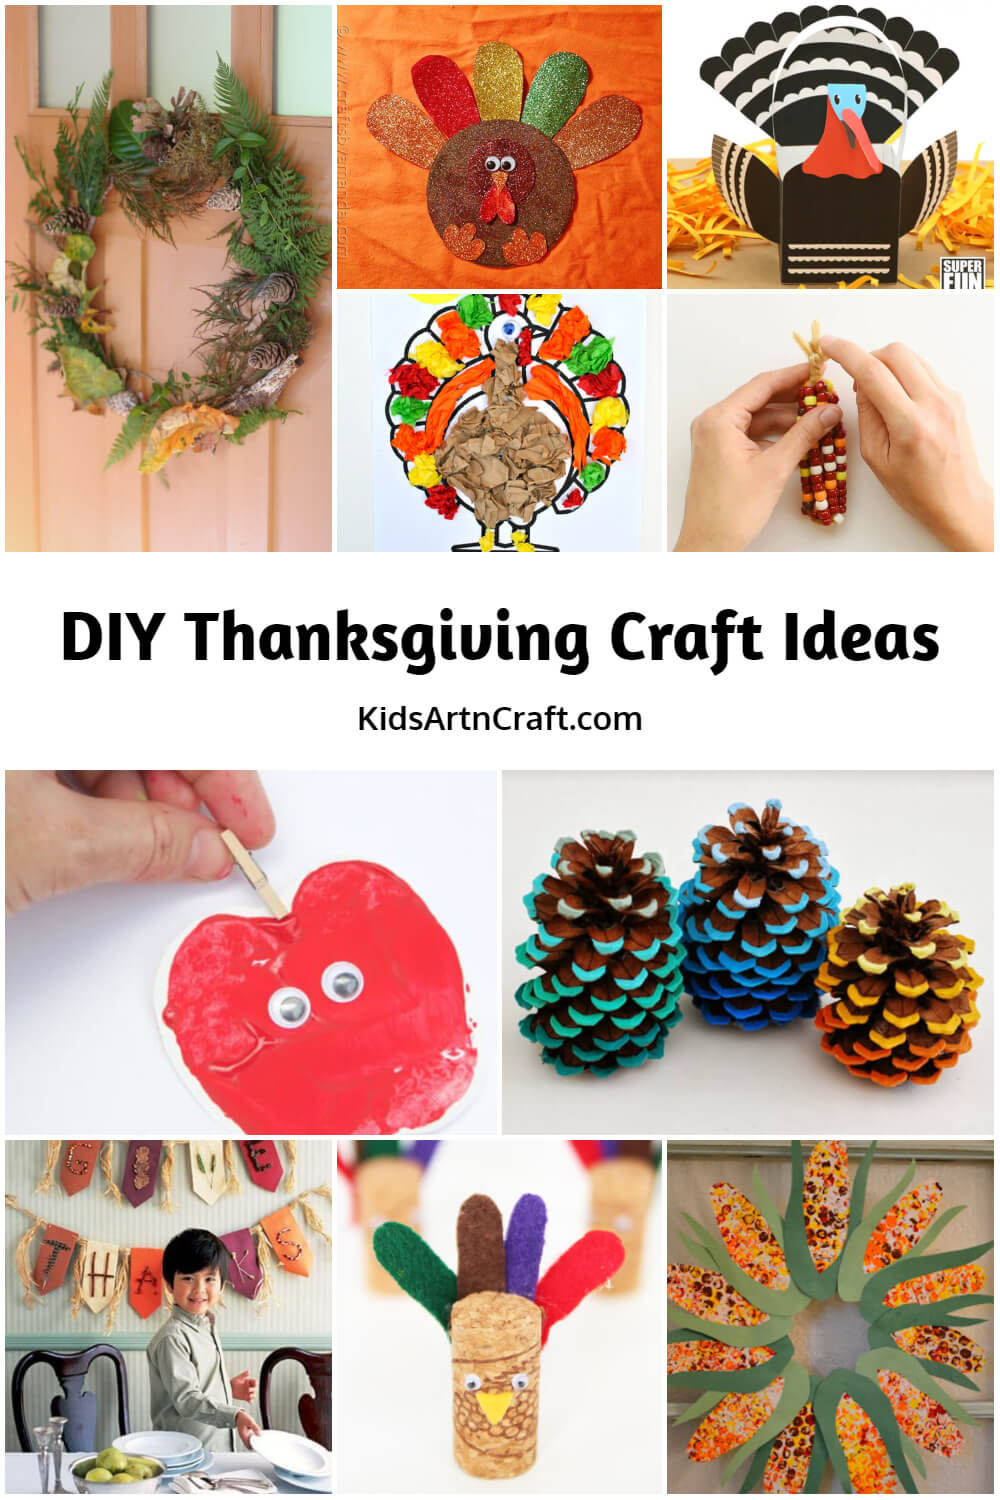 DIY Thanksgiving Craft Ideas